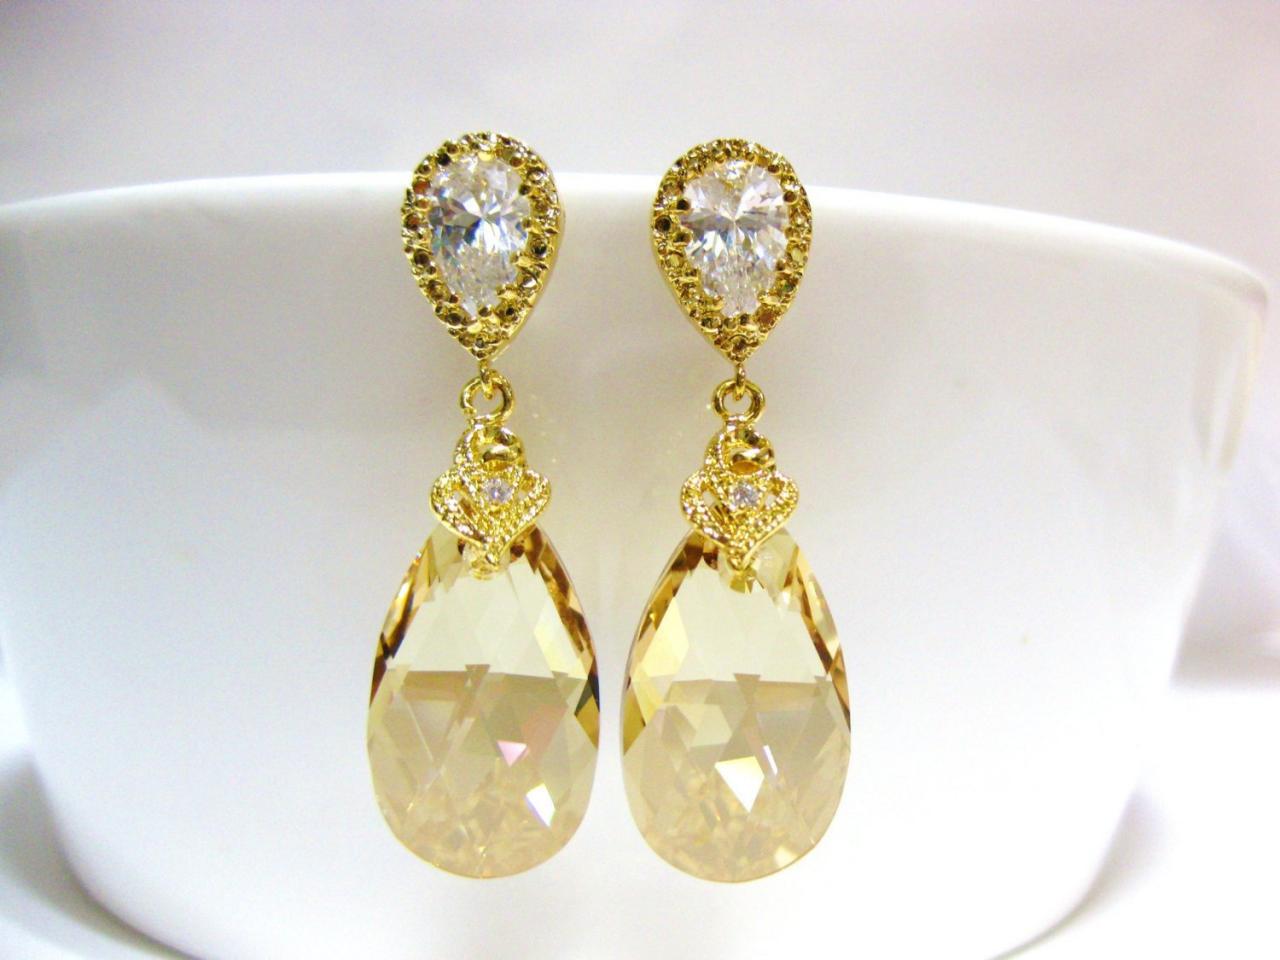 Swarovski Golden Shadow Earrings Bridal Crystal Earrings Champagne Gold Teardrop Earrings Bridesmaids Gift Wedding Jewelry Gift Set (e024)